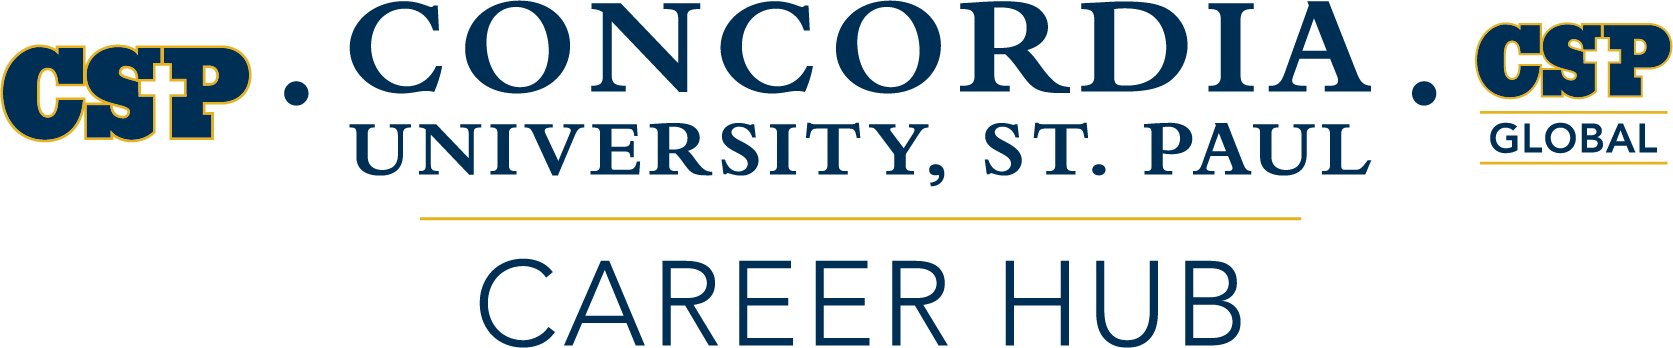 Concordia University St Paul Career Hub logo